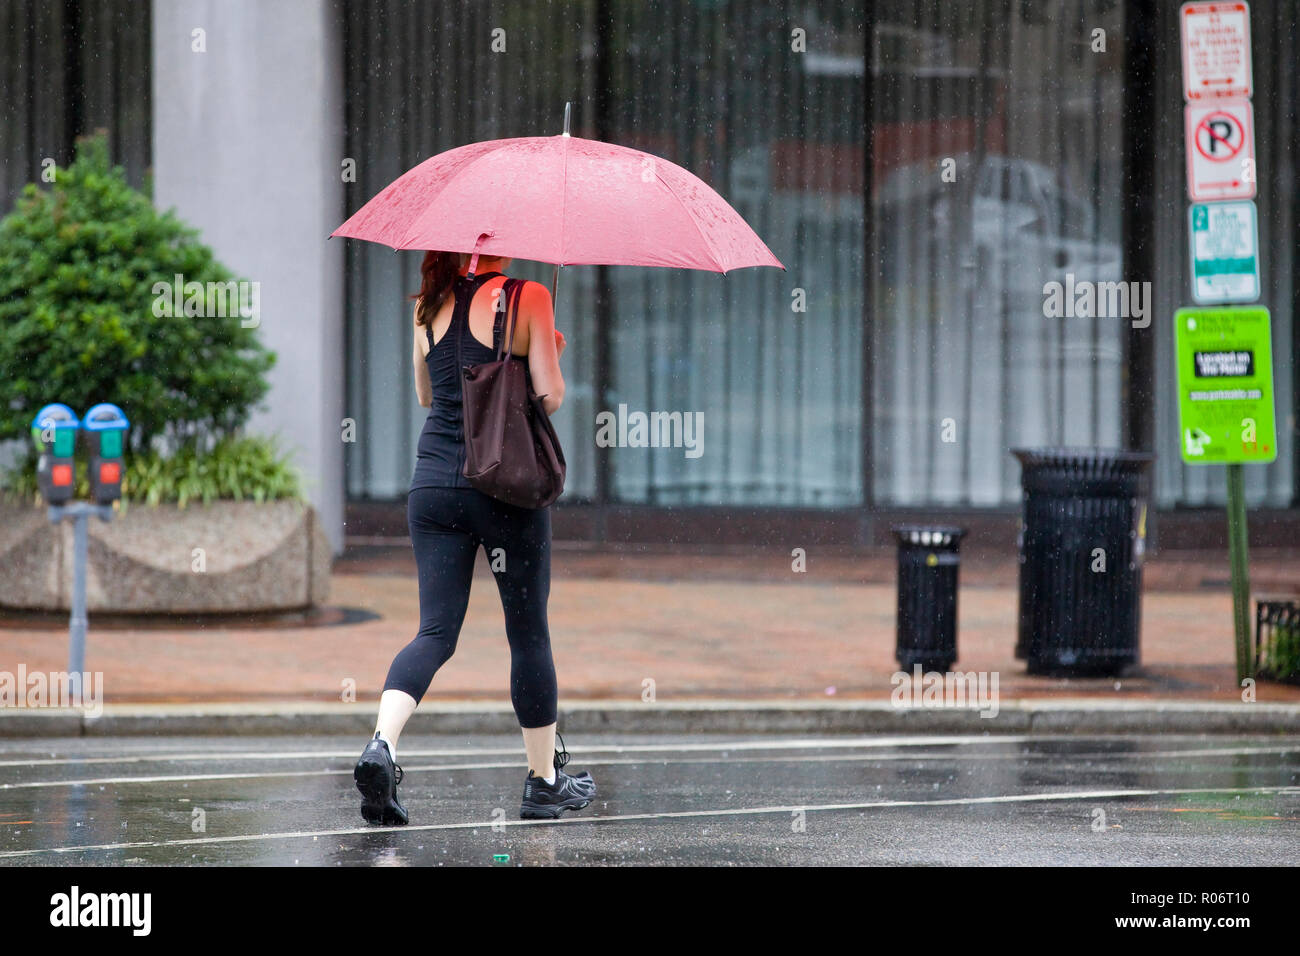 A woman walking alone on a rainy day holding an umbrella - USA Stock Photo